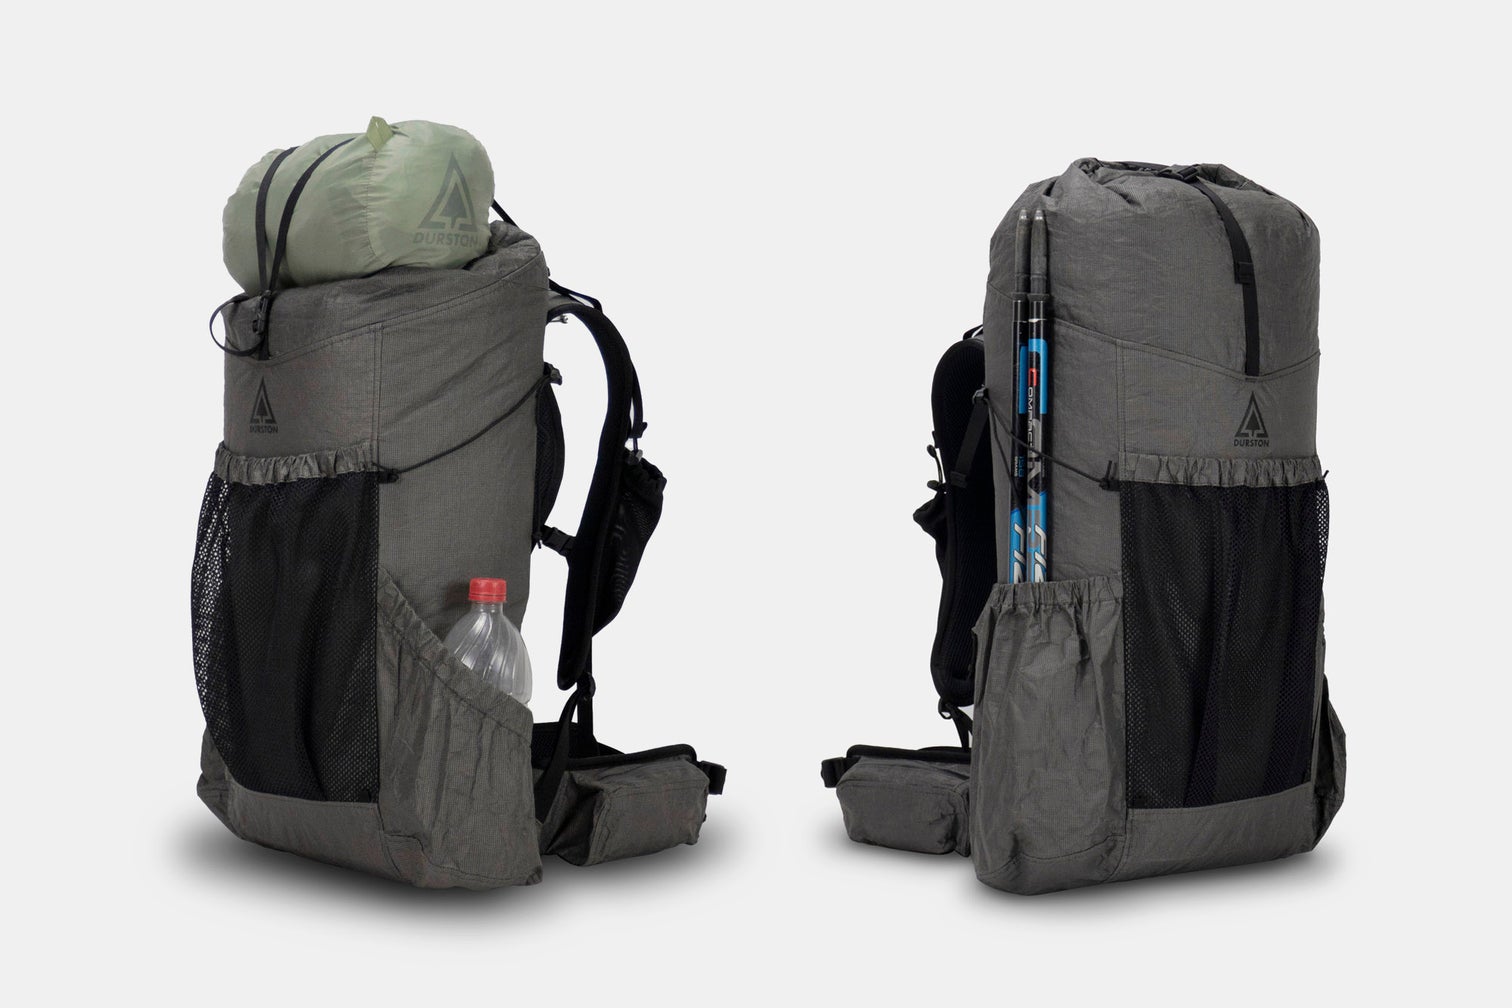 DURSTONGEAR Dan Durston Gear Kakwa 40 Ultralight Backpack shoulder connects directly hipbelt X-mid pro 1 lightweight